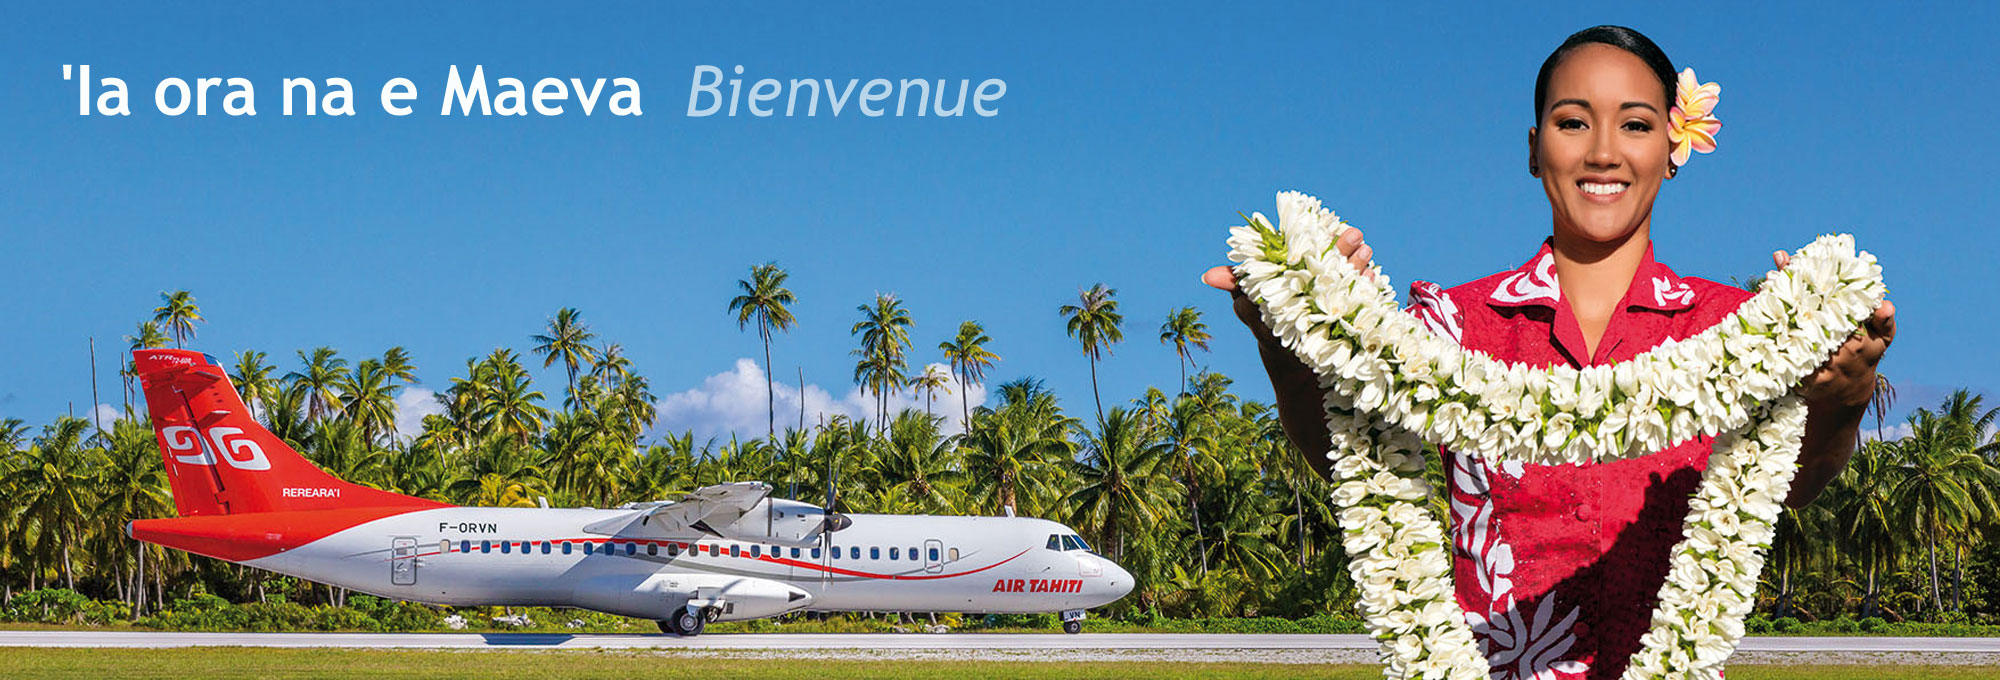 Air Tahiti, la compagnie reliant Tahiti et ses îles © M. Brighwell & G. Le Bacon